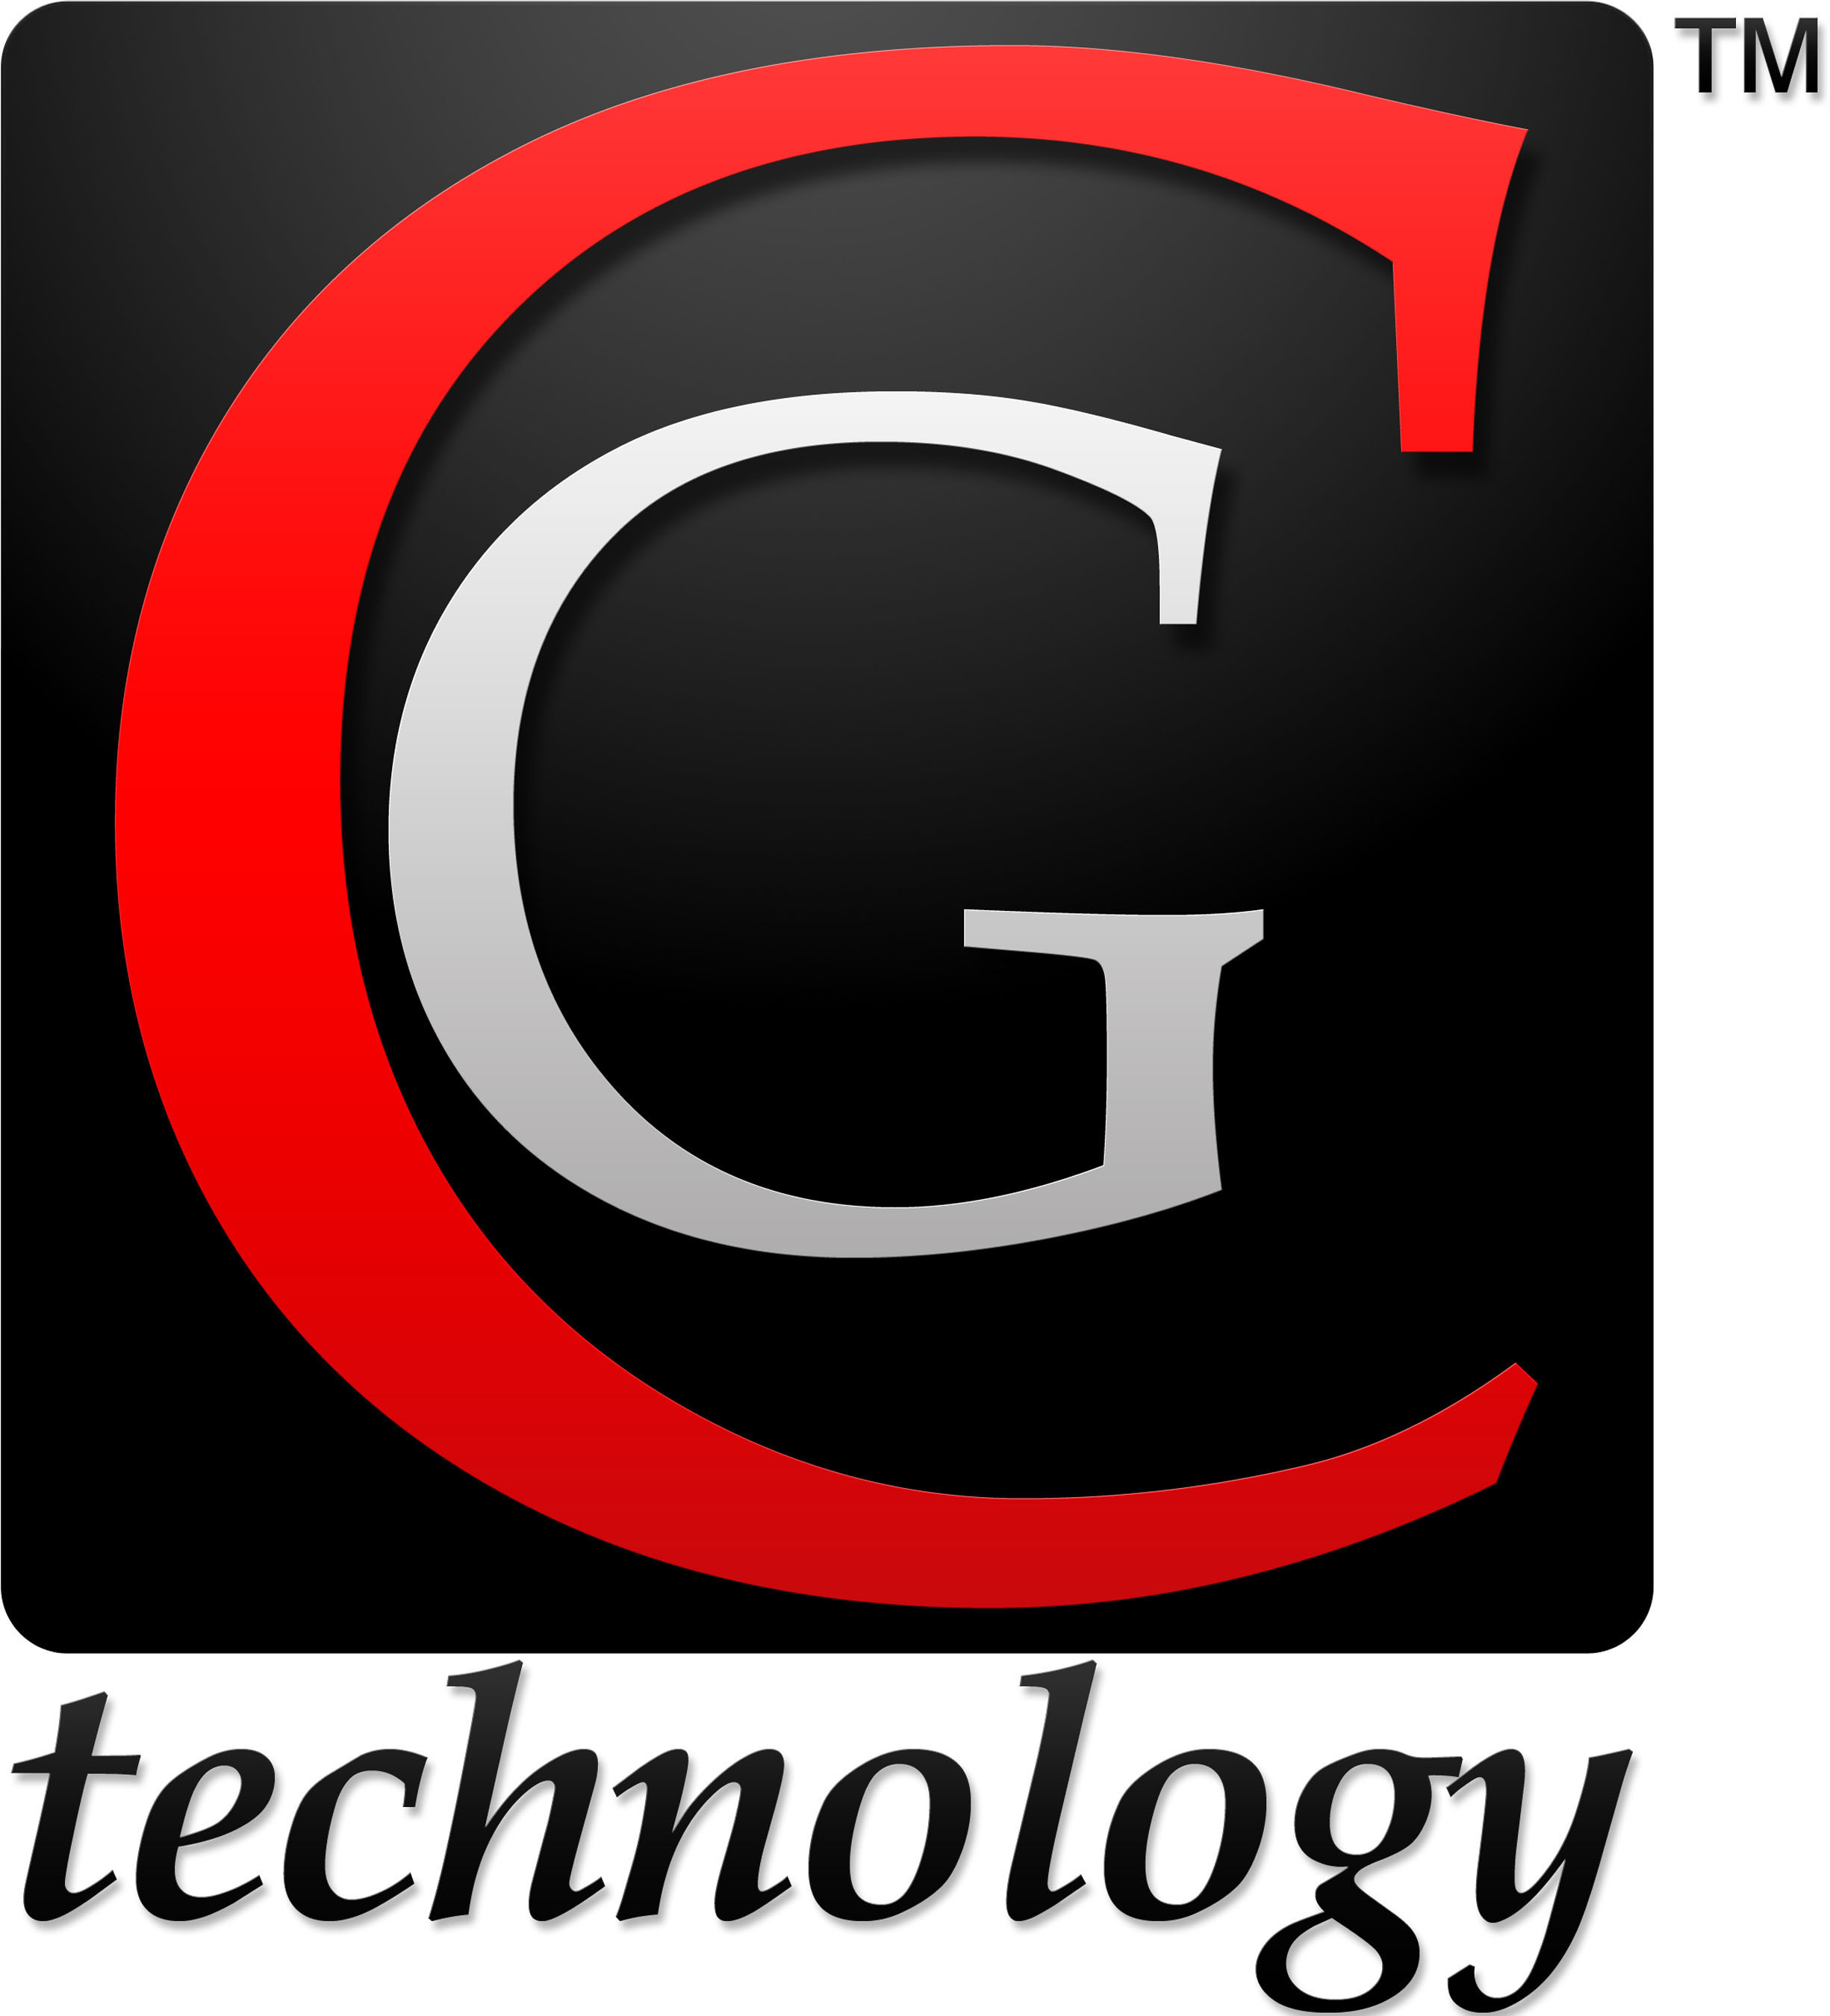 CG Technology logo. (PRNewsFoto/CG Technology) (PRNewsFoto/CG TECHNOLOGY)